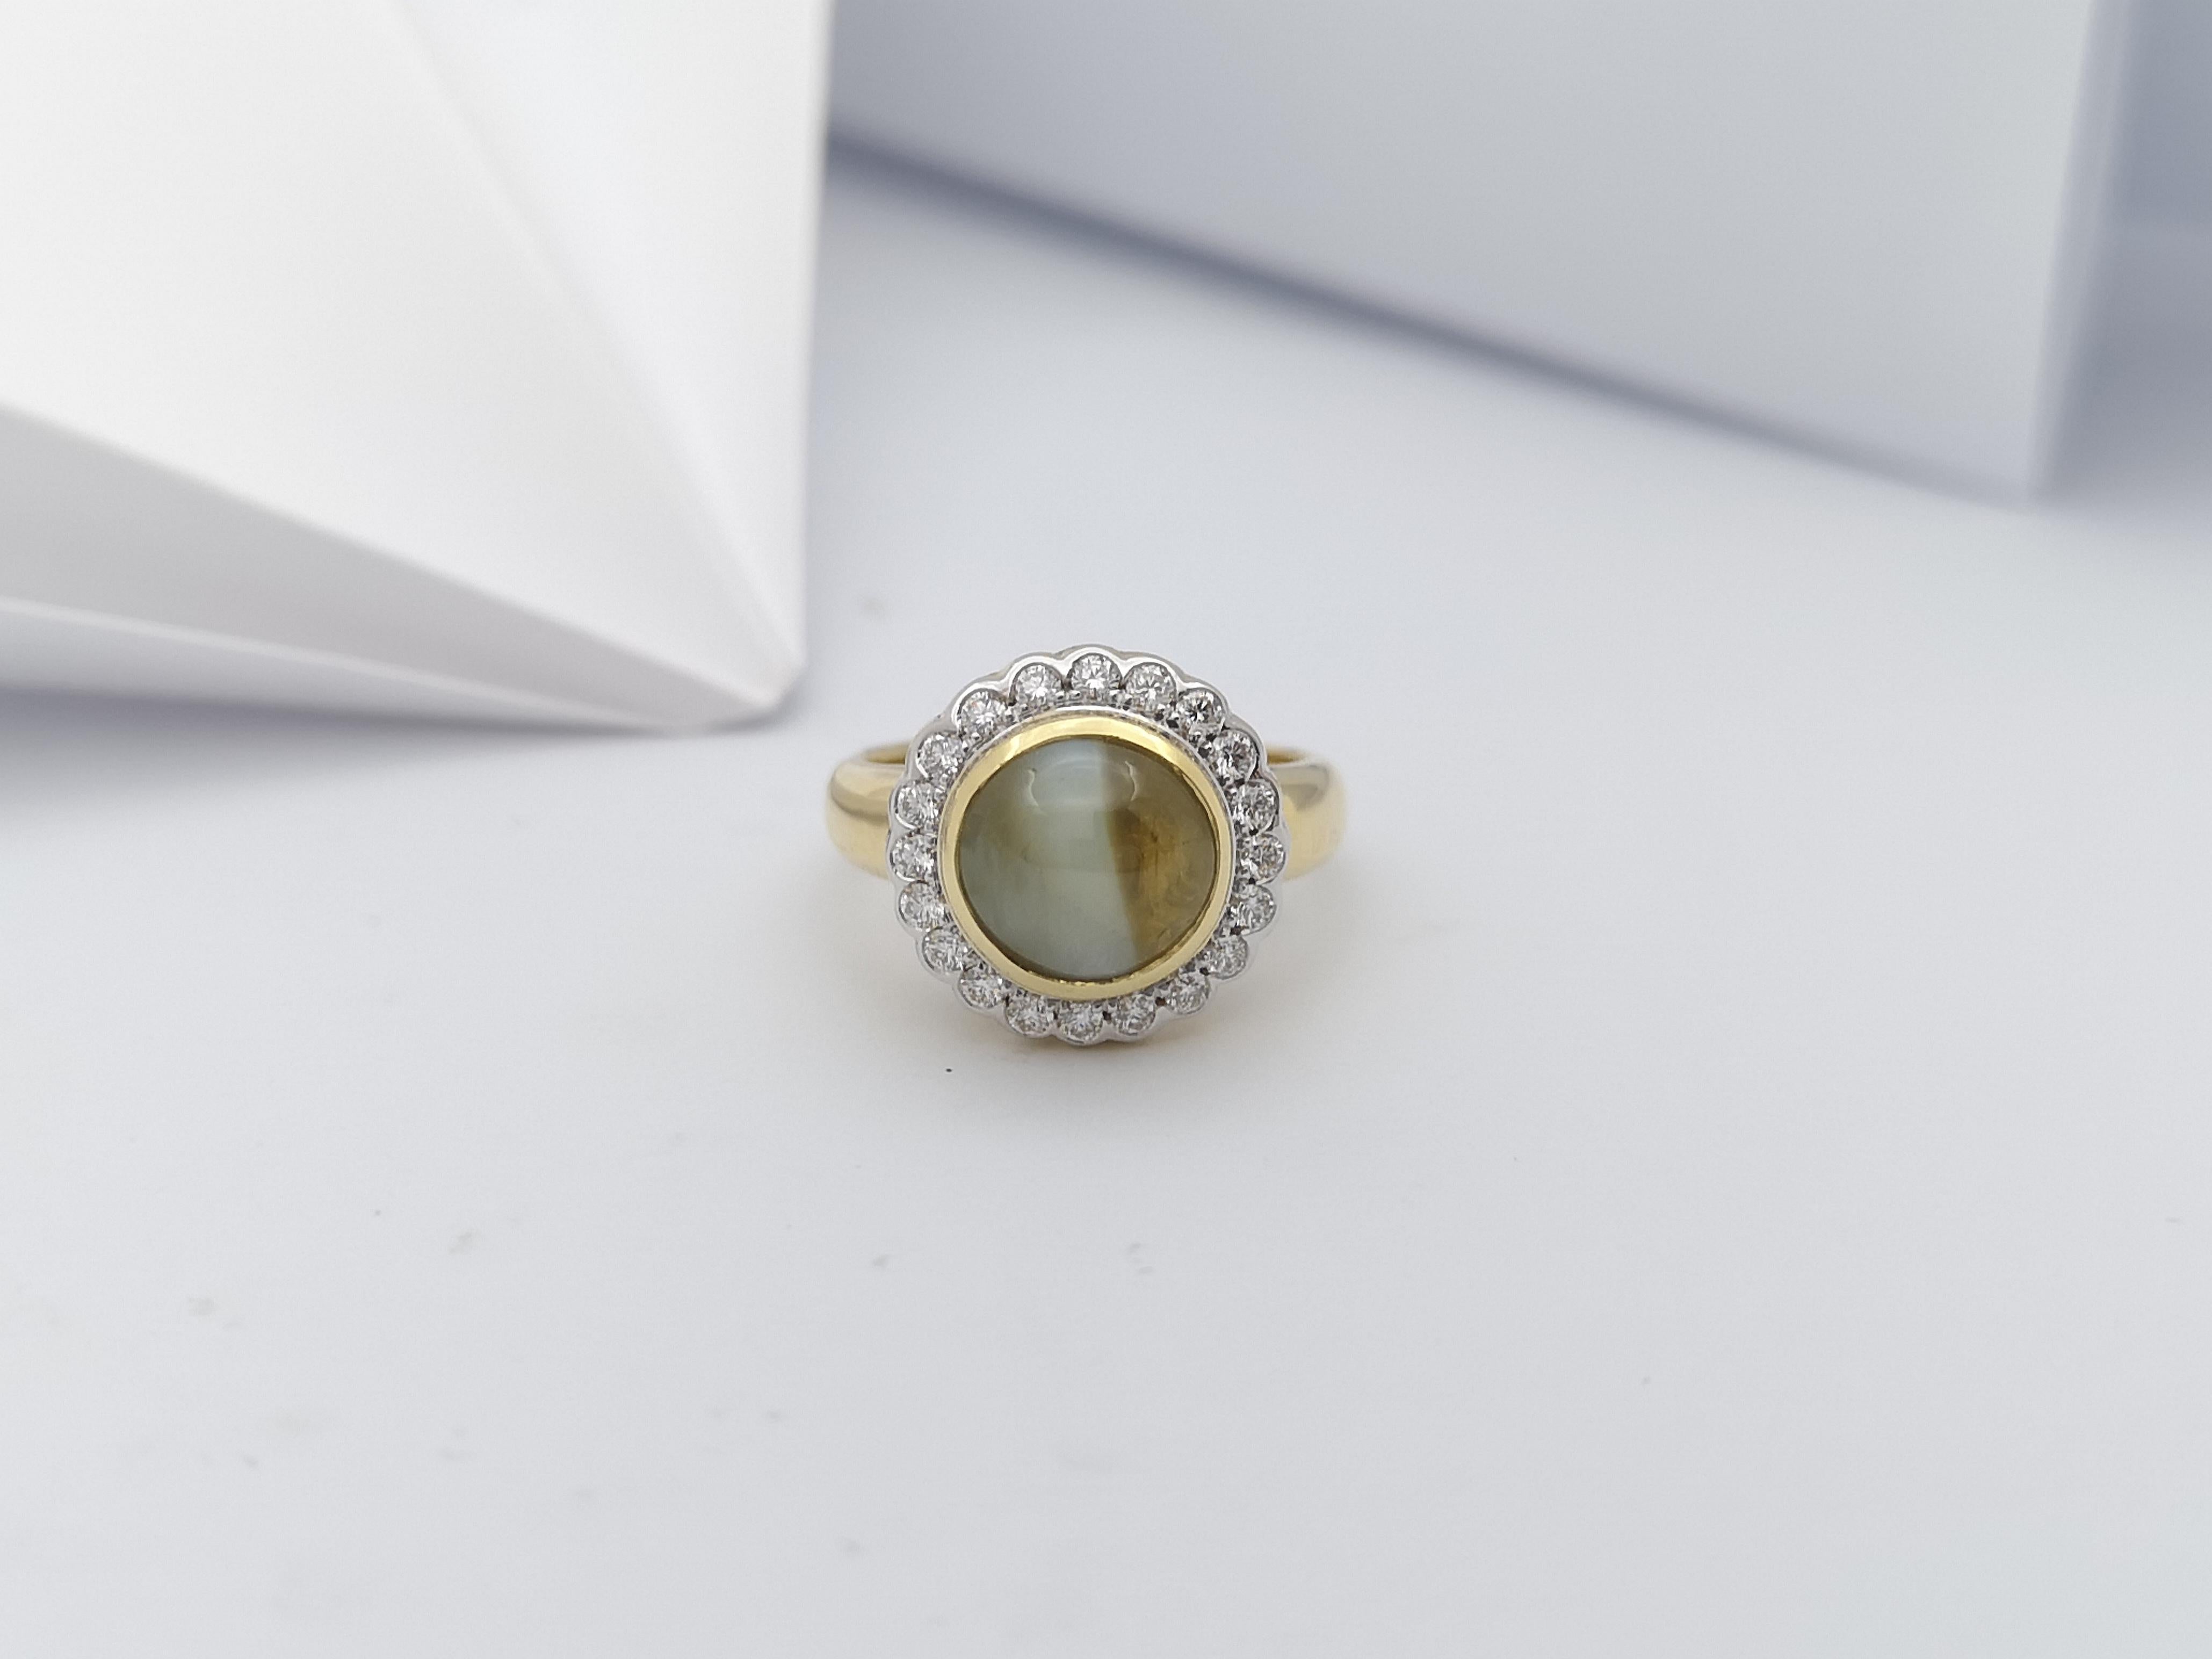 Chrysoberyl Cat's Eye with Diamond Ring Set in 18 Karat Gold For Sale 3